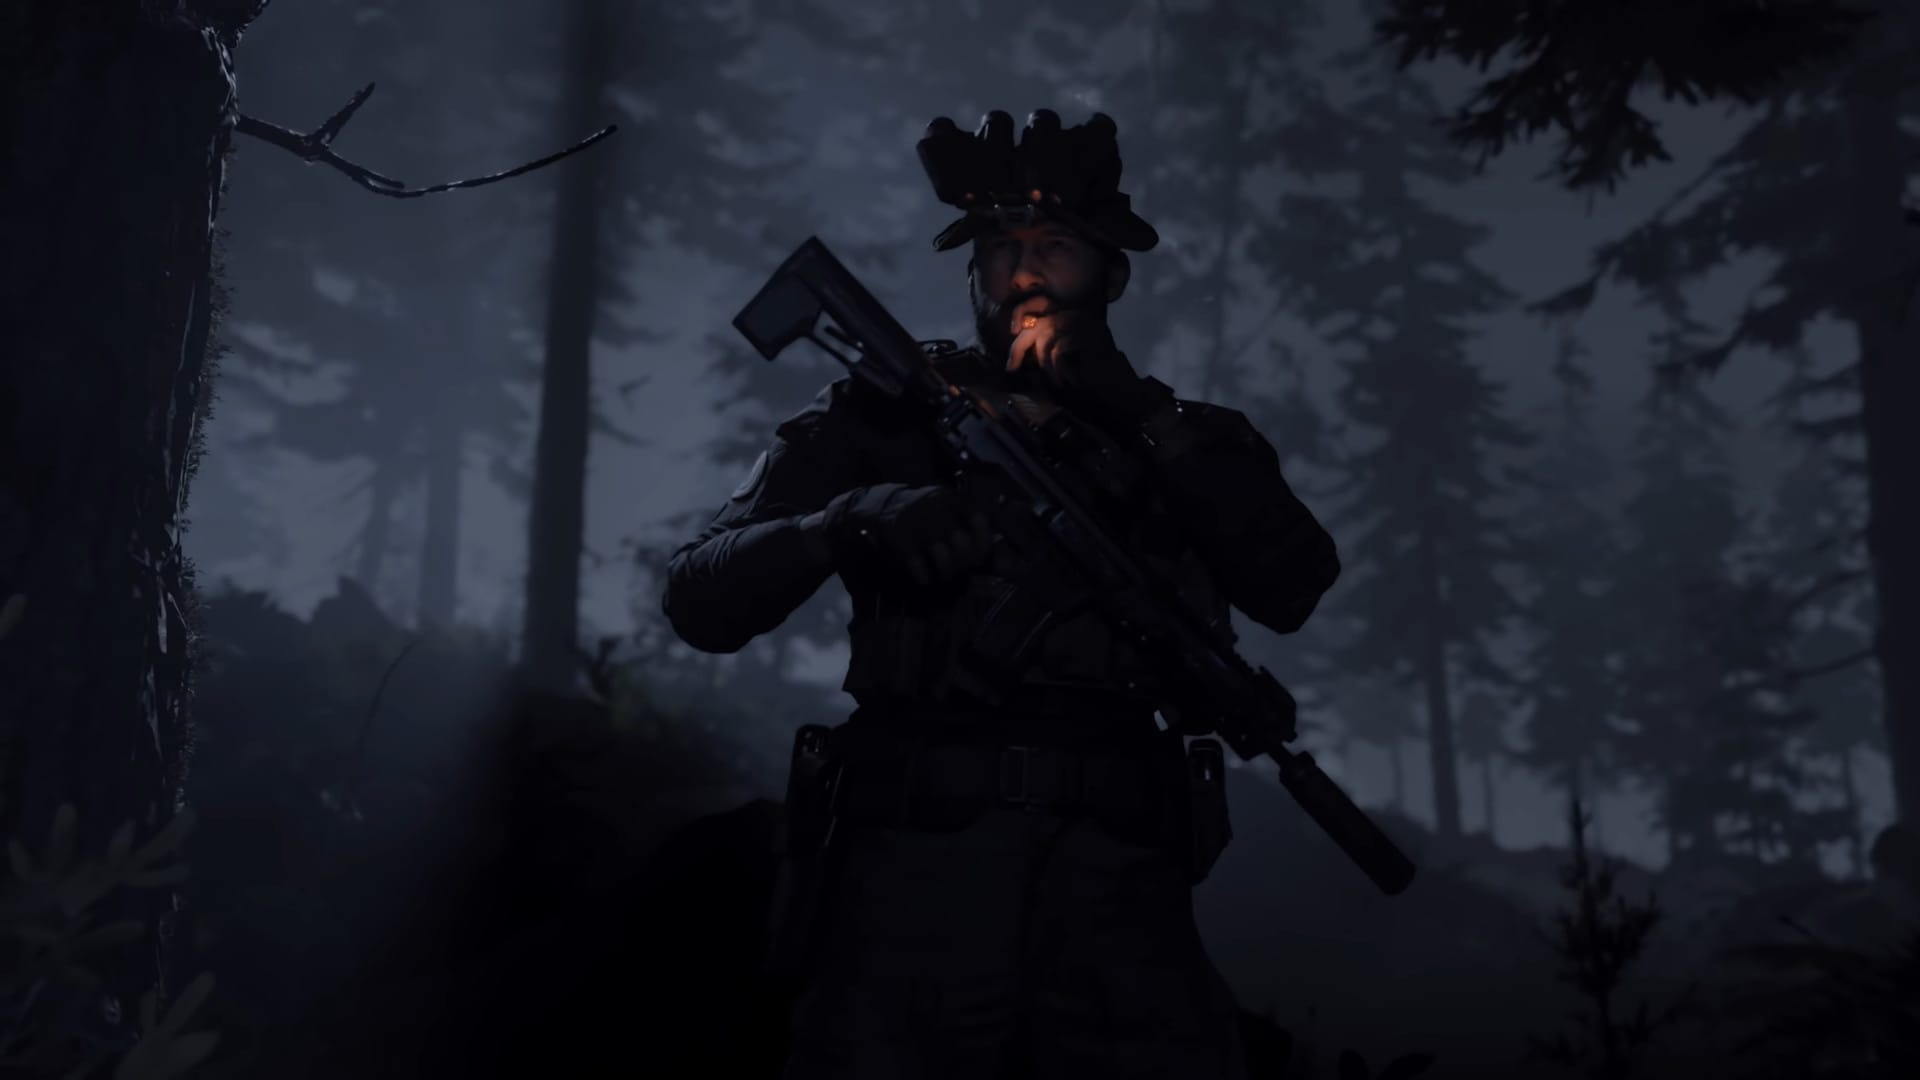 Call of Duty: Modern Warfare 2 Remastered [rumored]